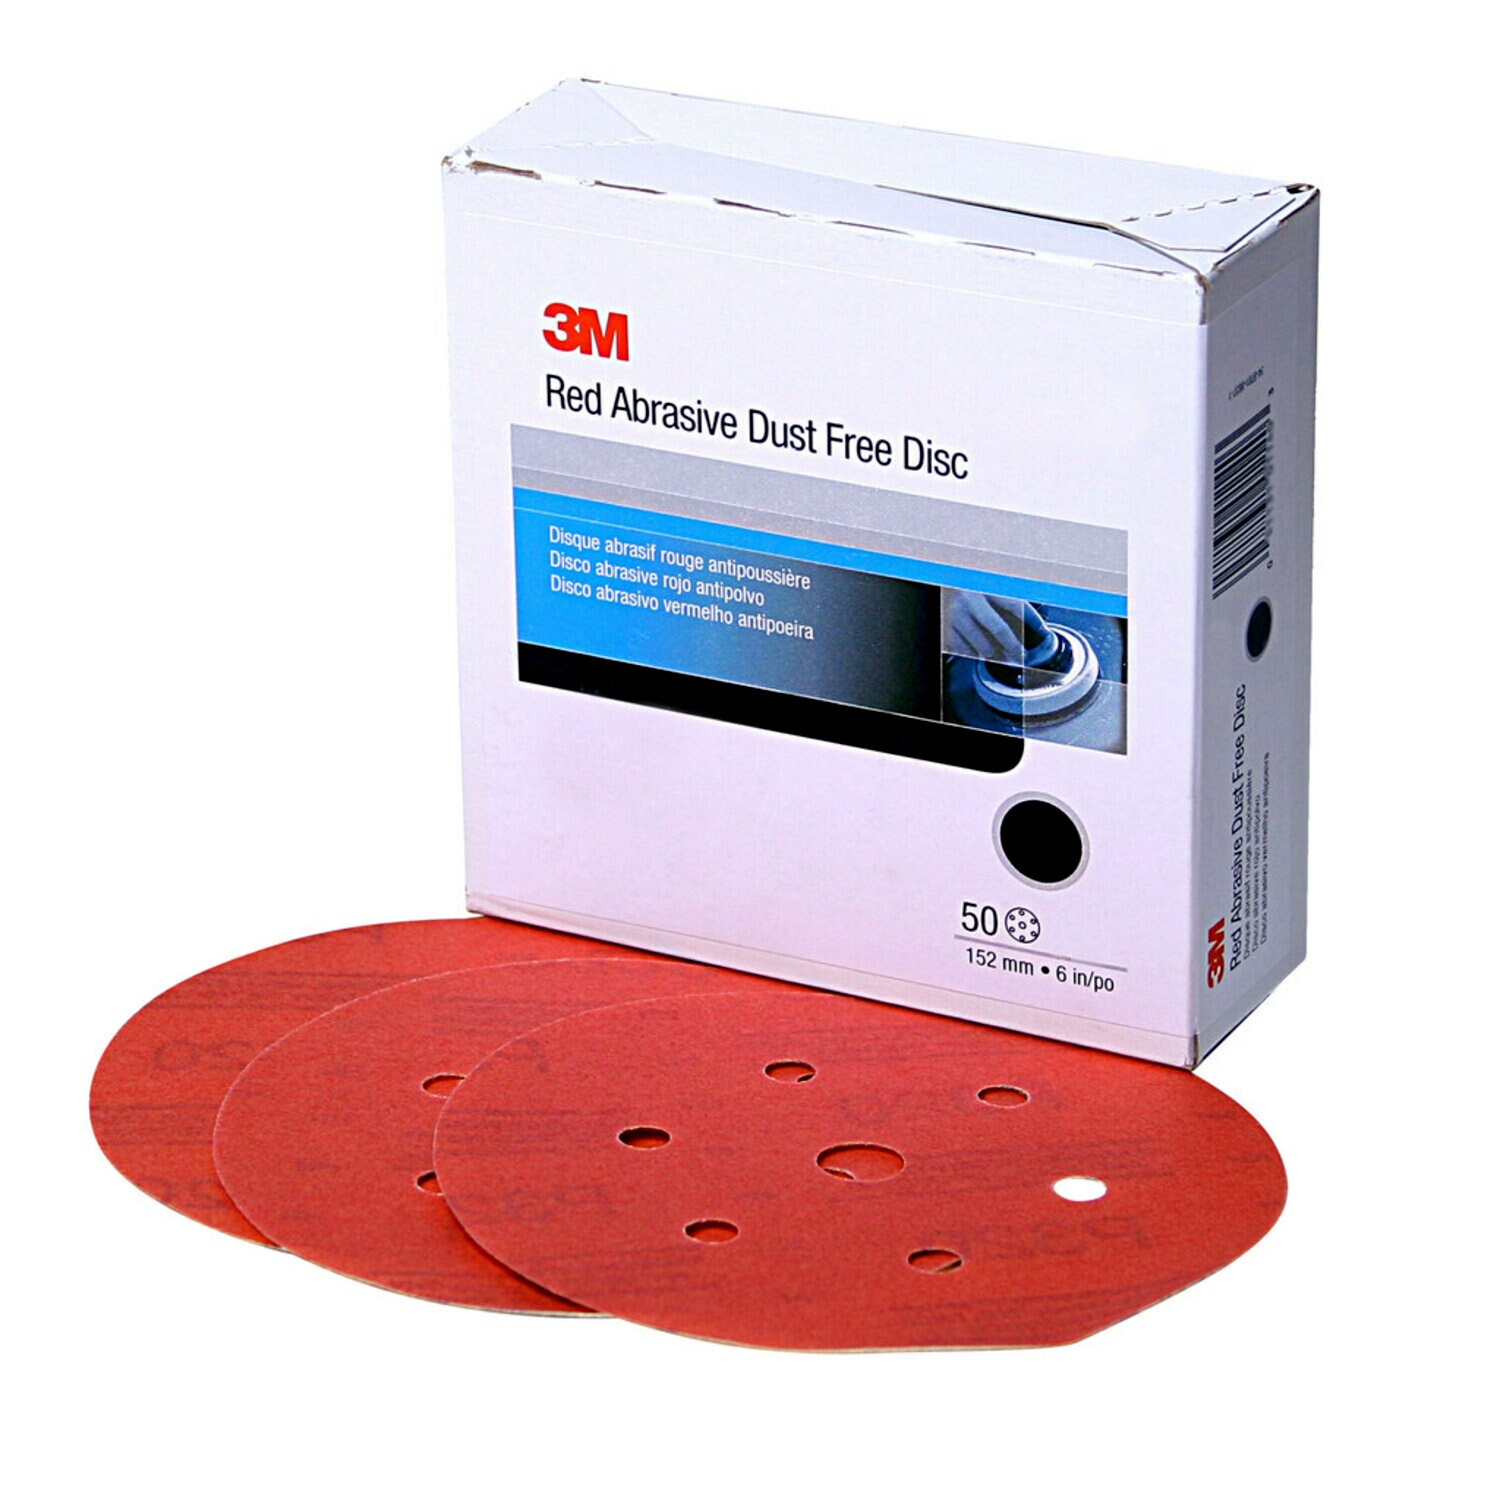 7000045453 - 3M Hookit Red Abrasive Disc Dust Free, 01137, 6 in, P600, 50 discs per
carton, 6 cartons per case